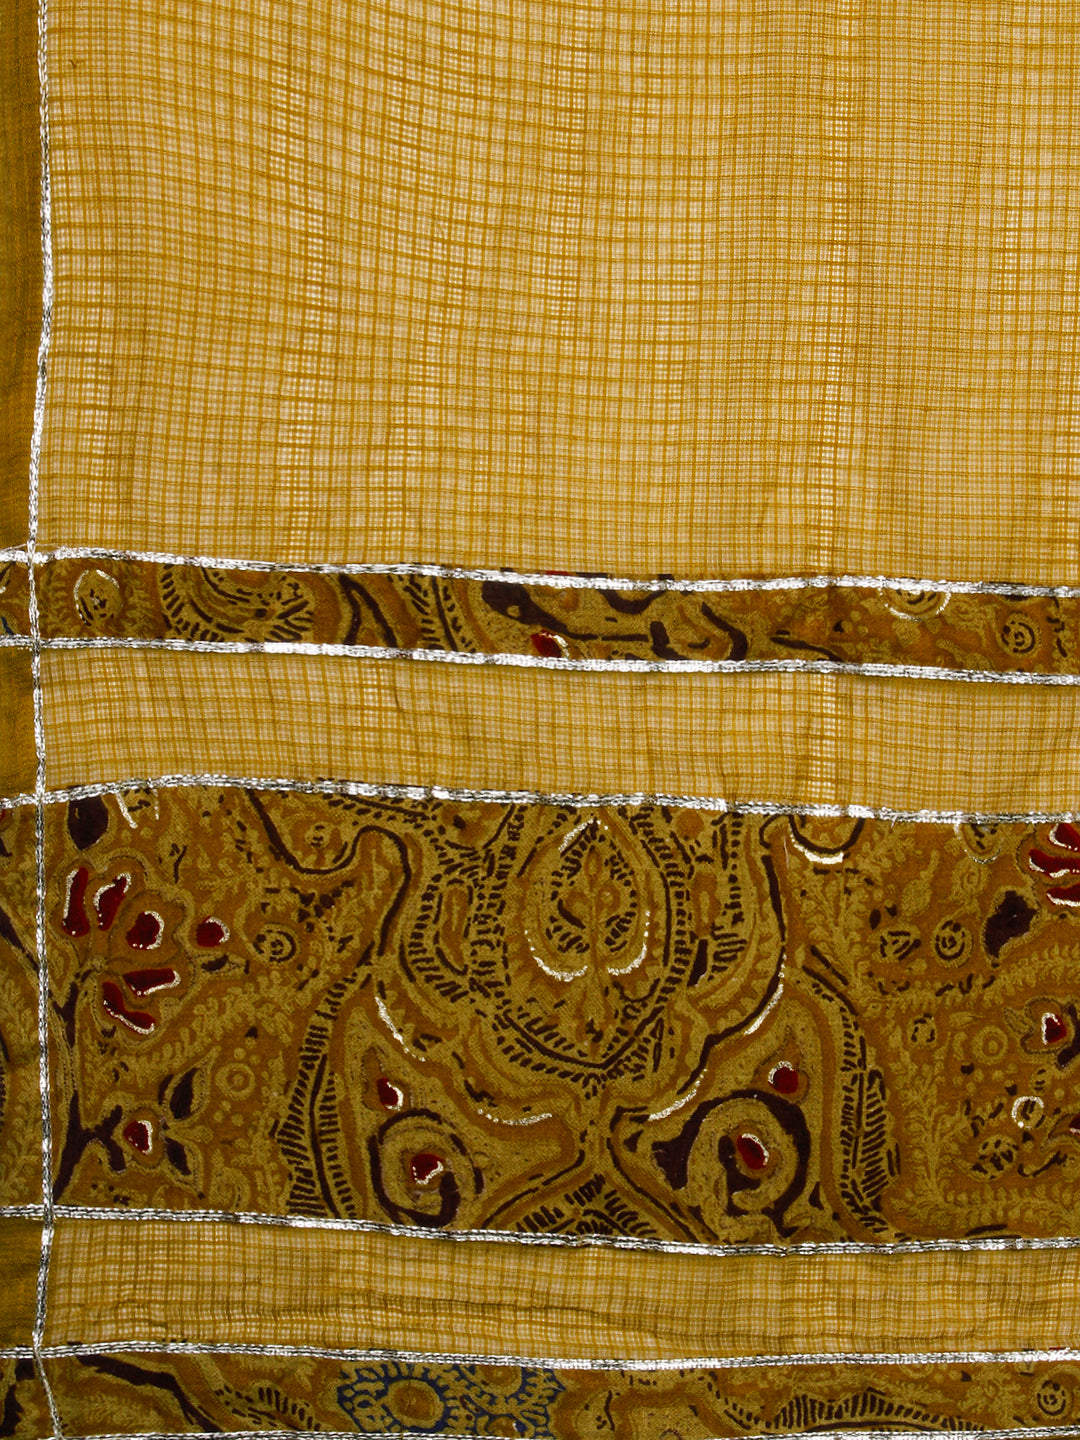 Abstract-Ethnic Printed Mirror, Beads & Zari Embroidered Anarkali Kurta with Pants & Dupatta - Mustard